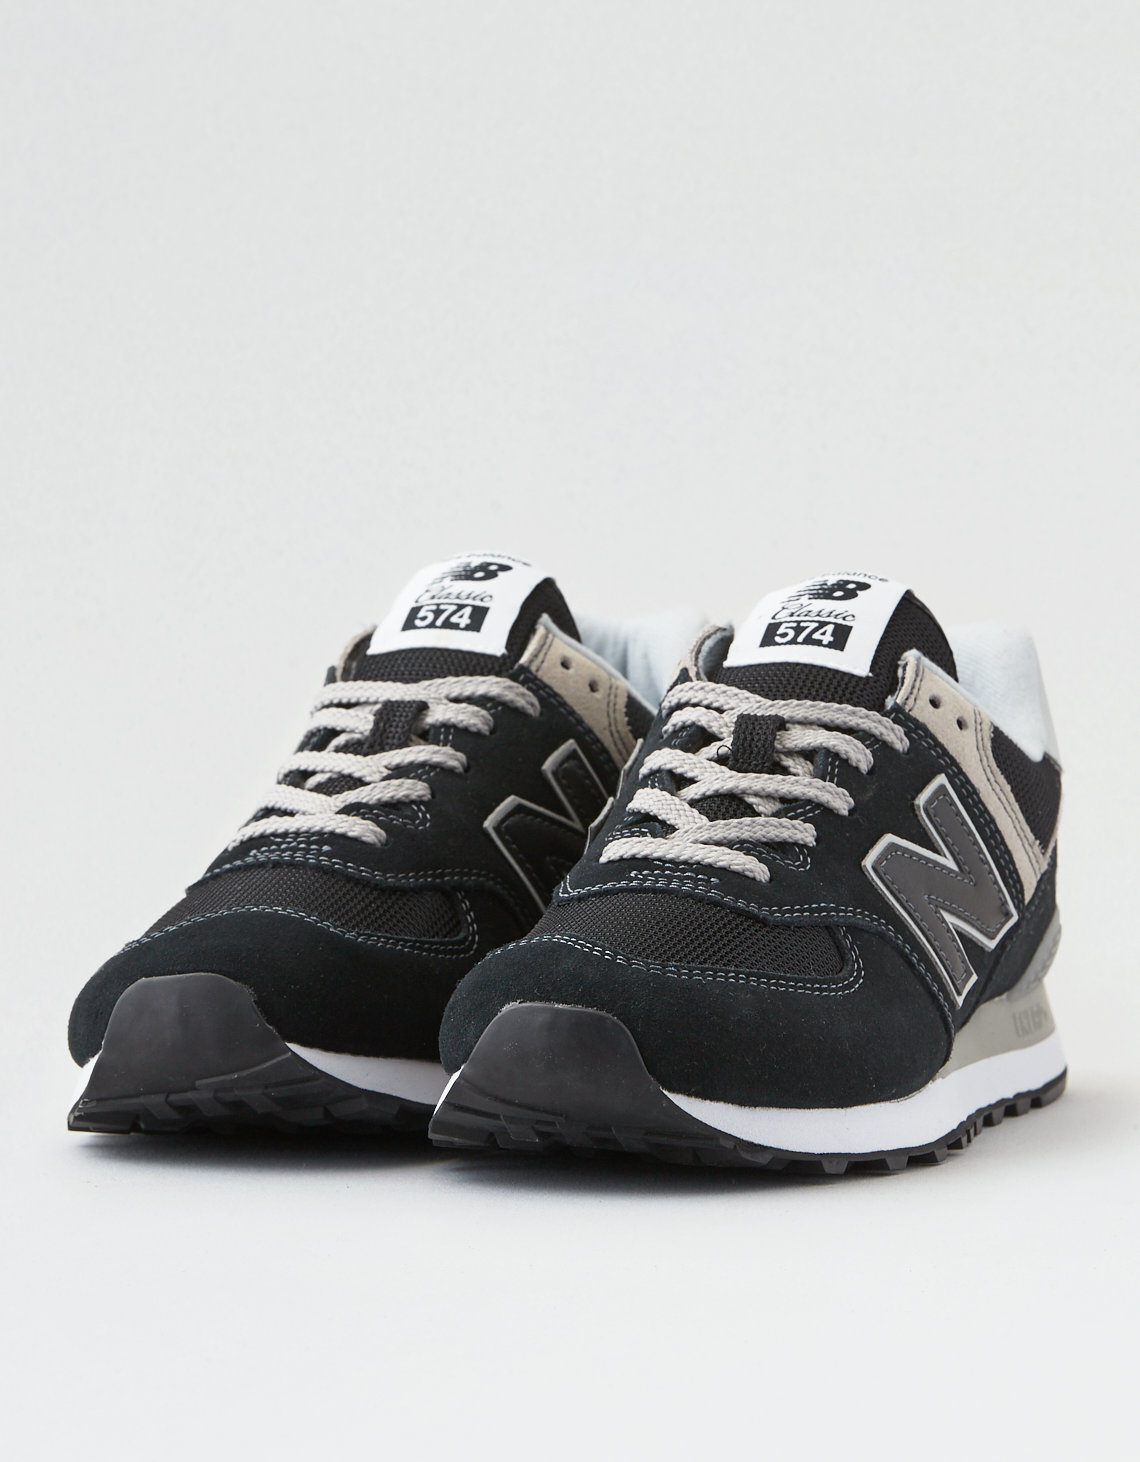 New Balance 574 Core Sneaker